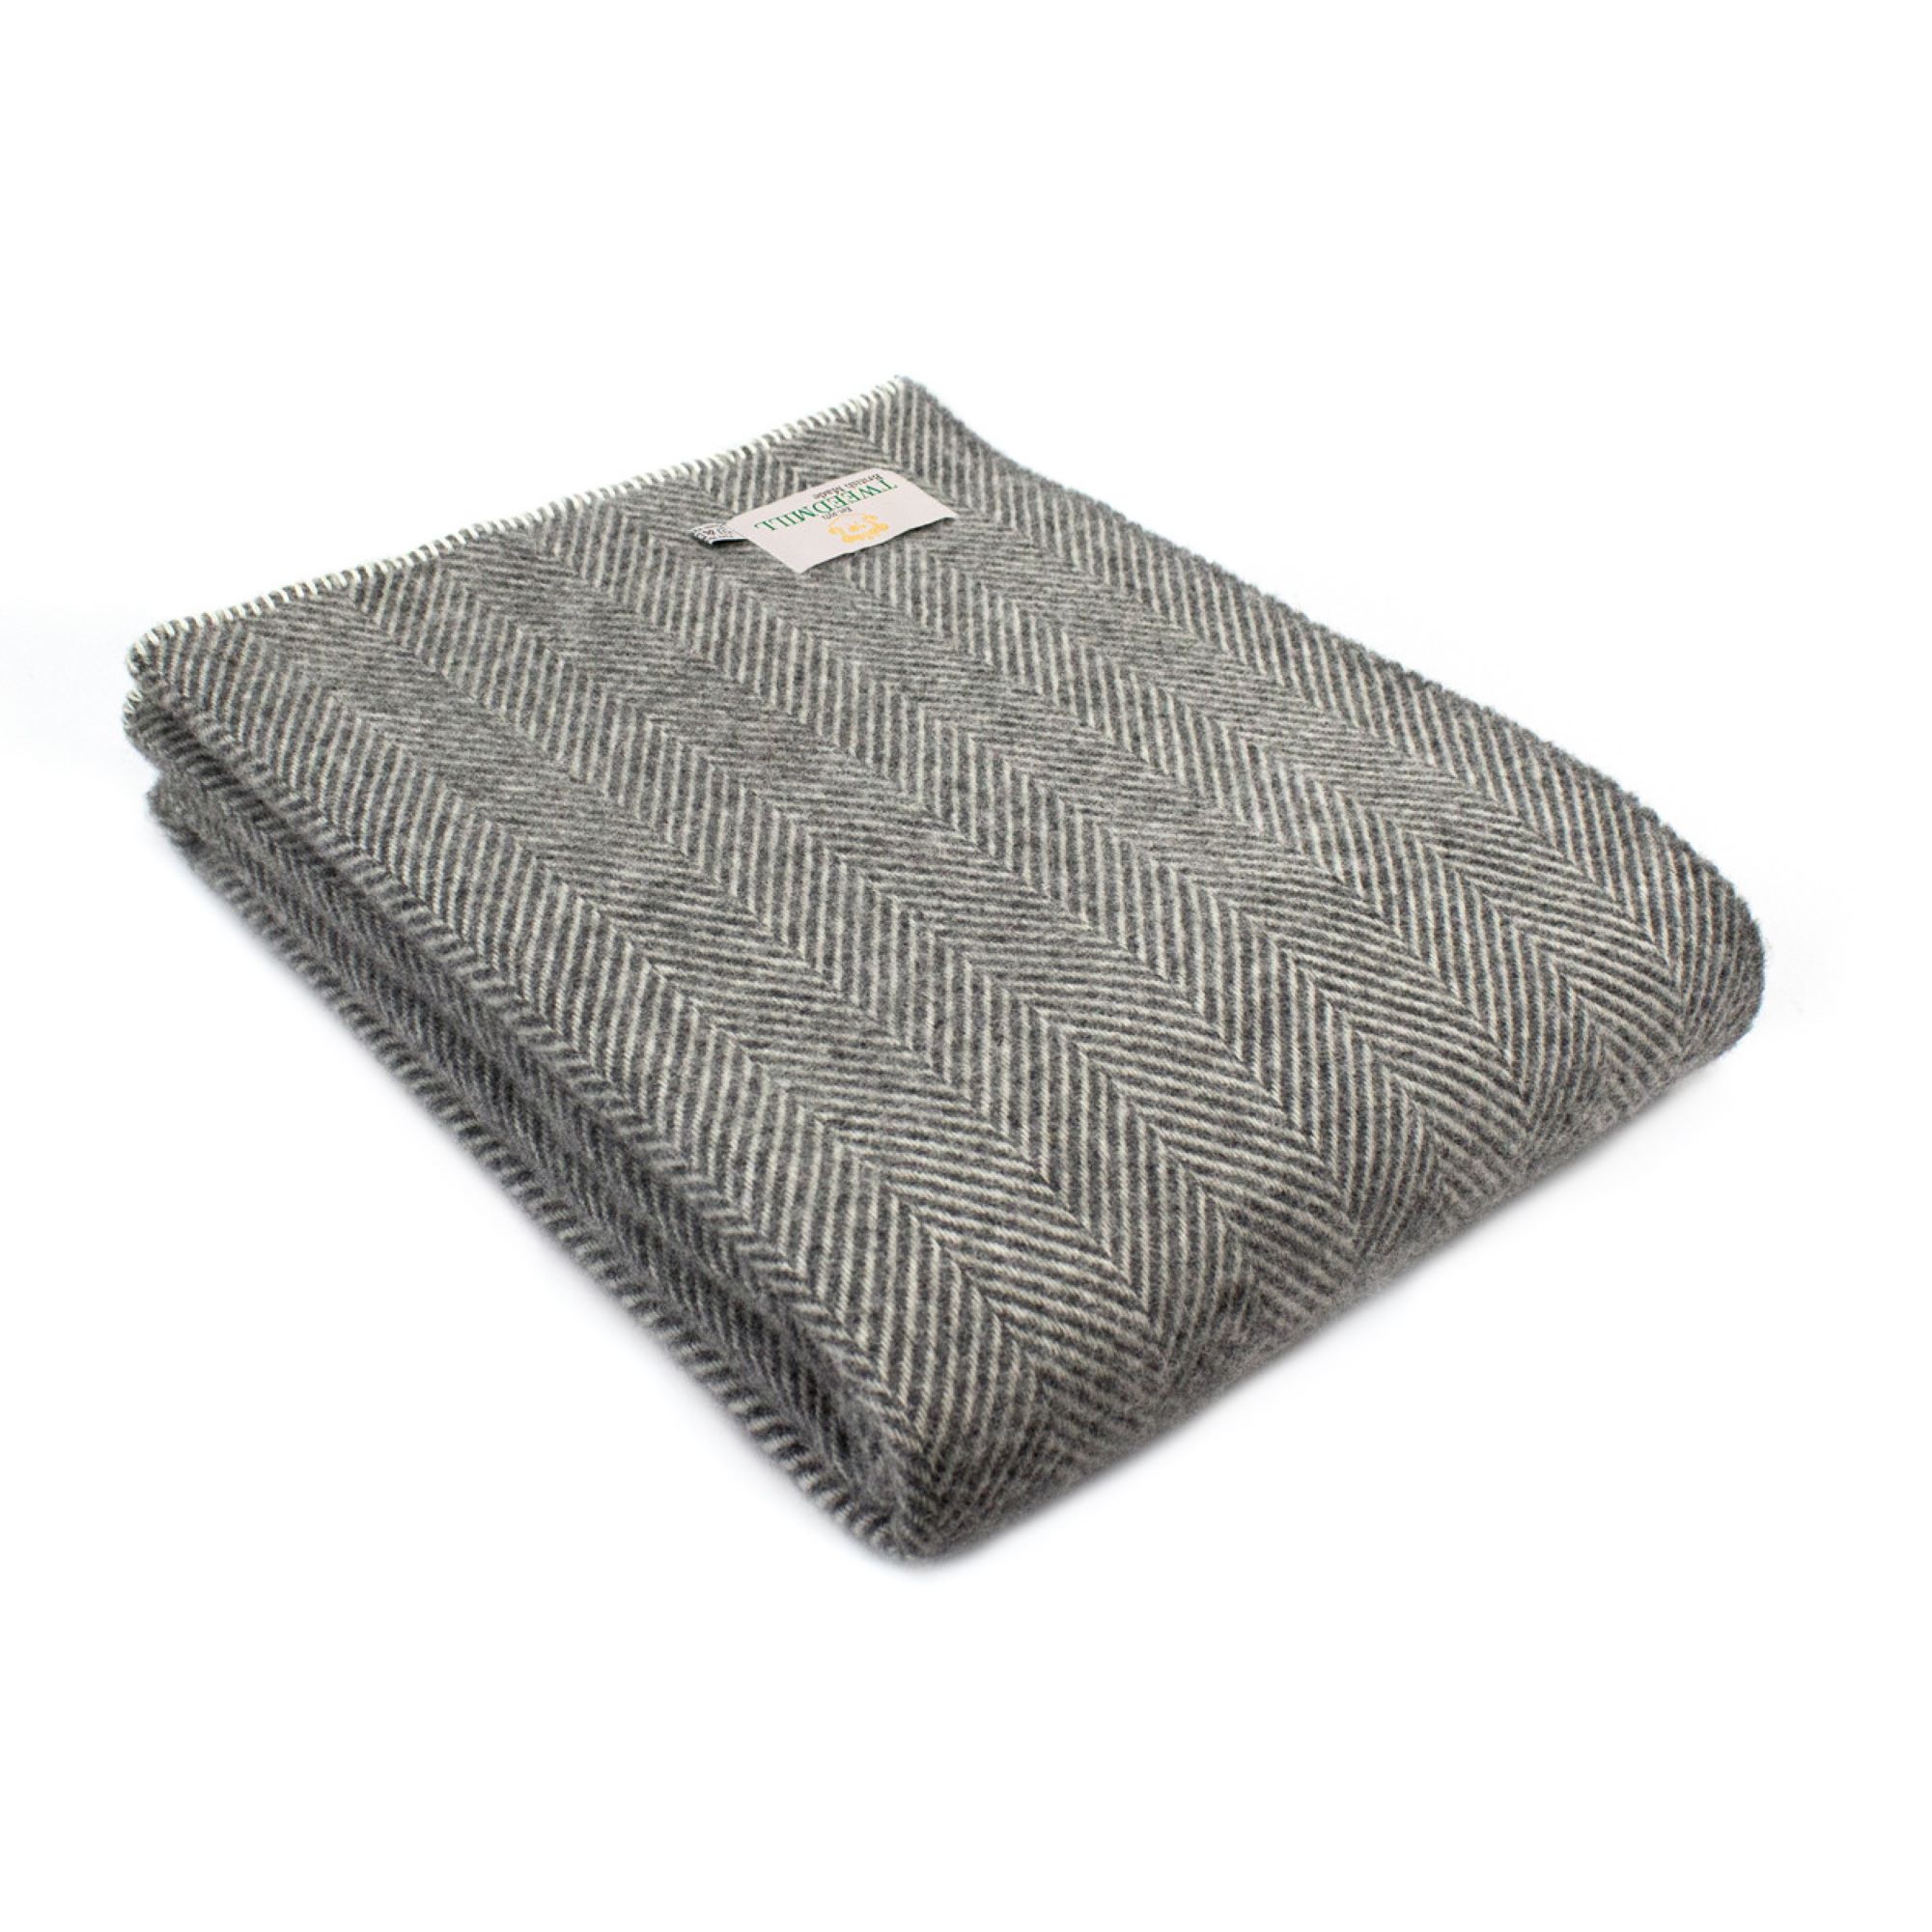 Tweedmill Slate Grey Pure New Wool Fishbone Throw with Cream Blanket Stitch Edge